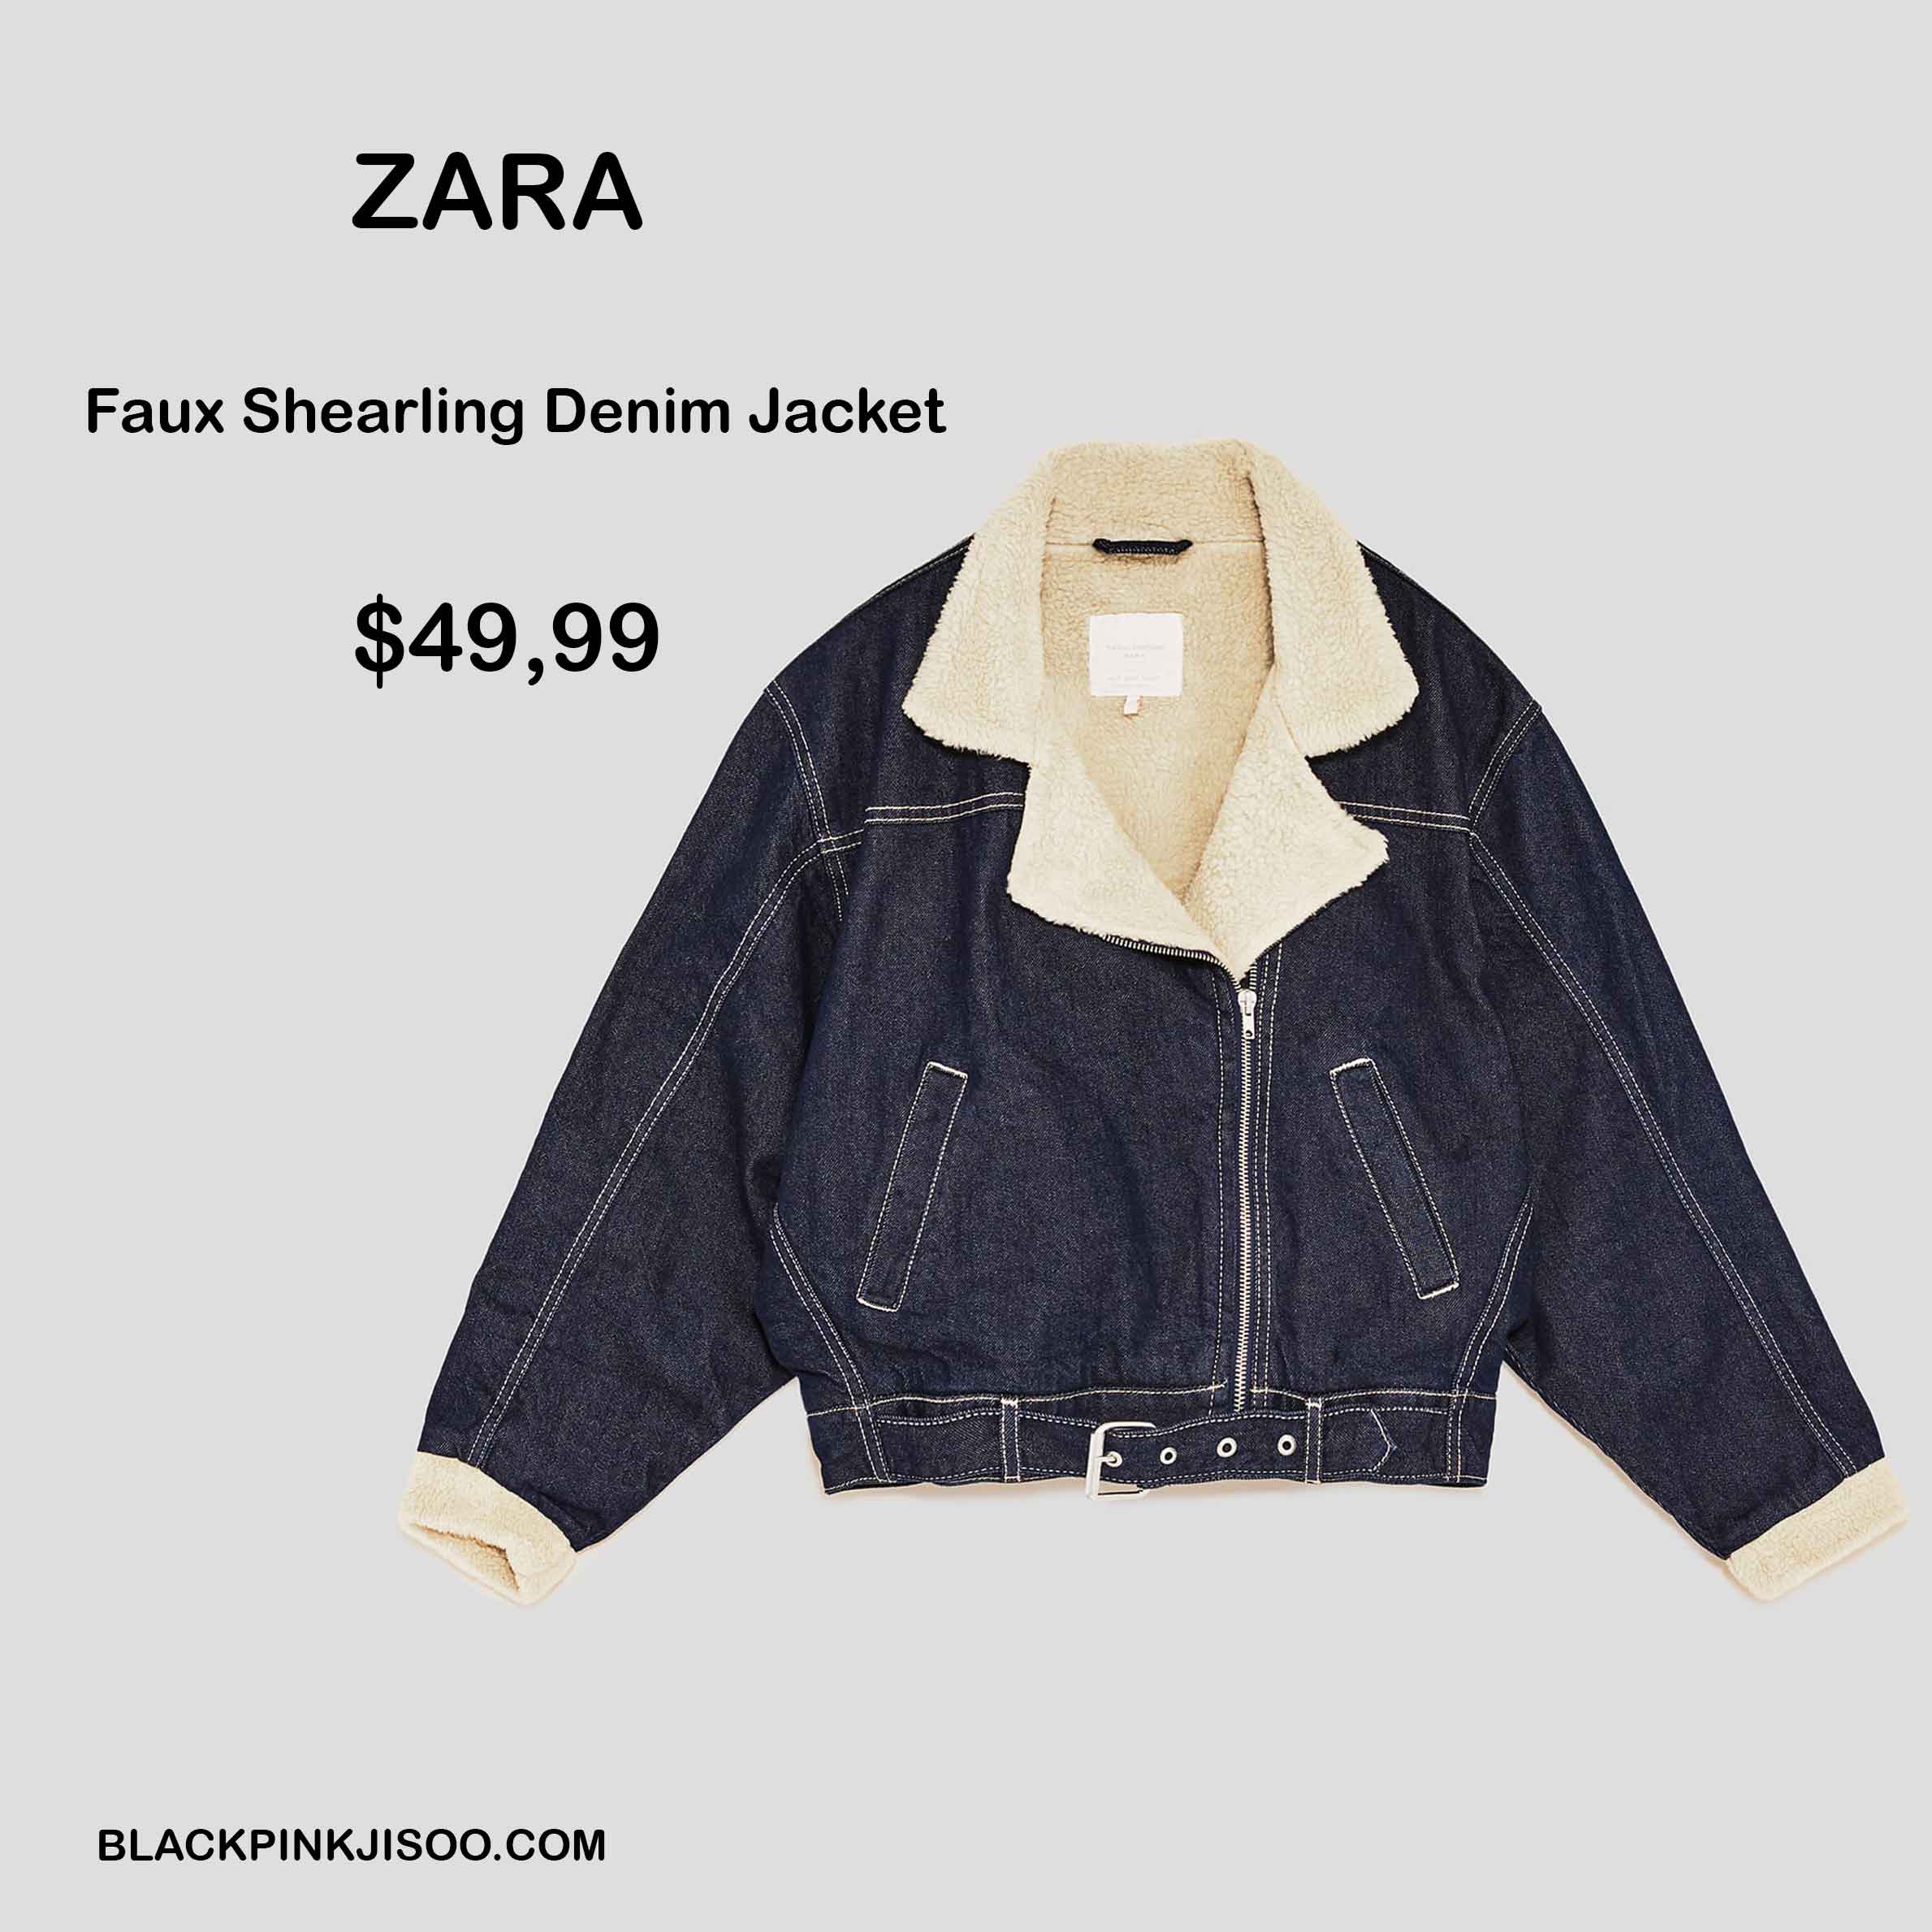 zara faux shearling denim jacket